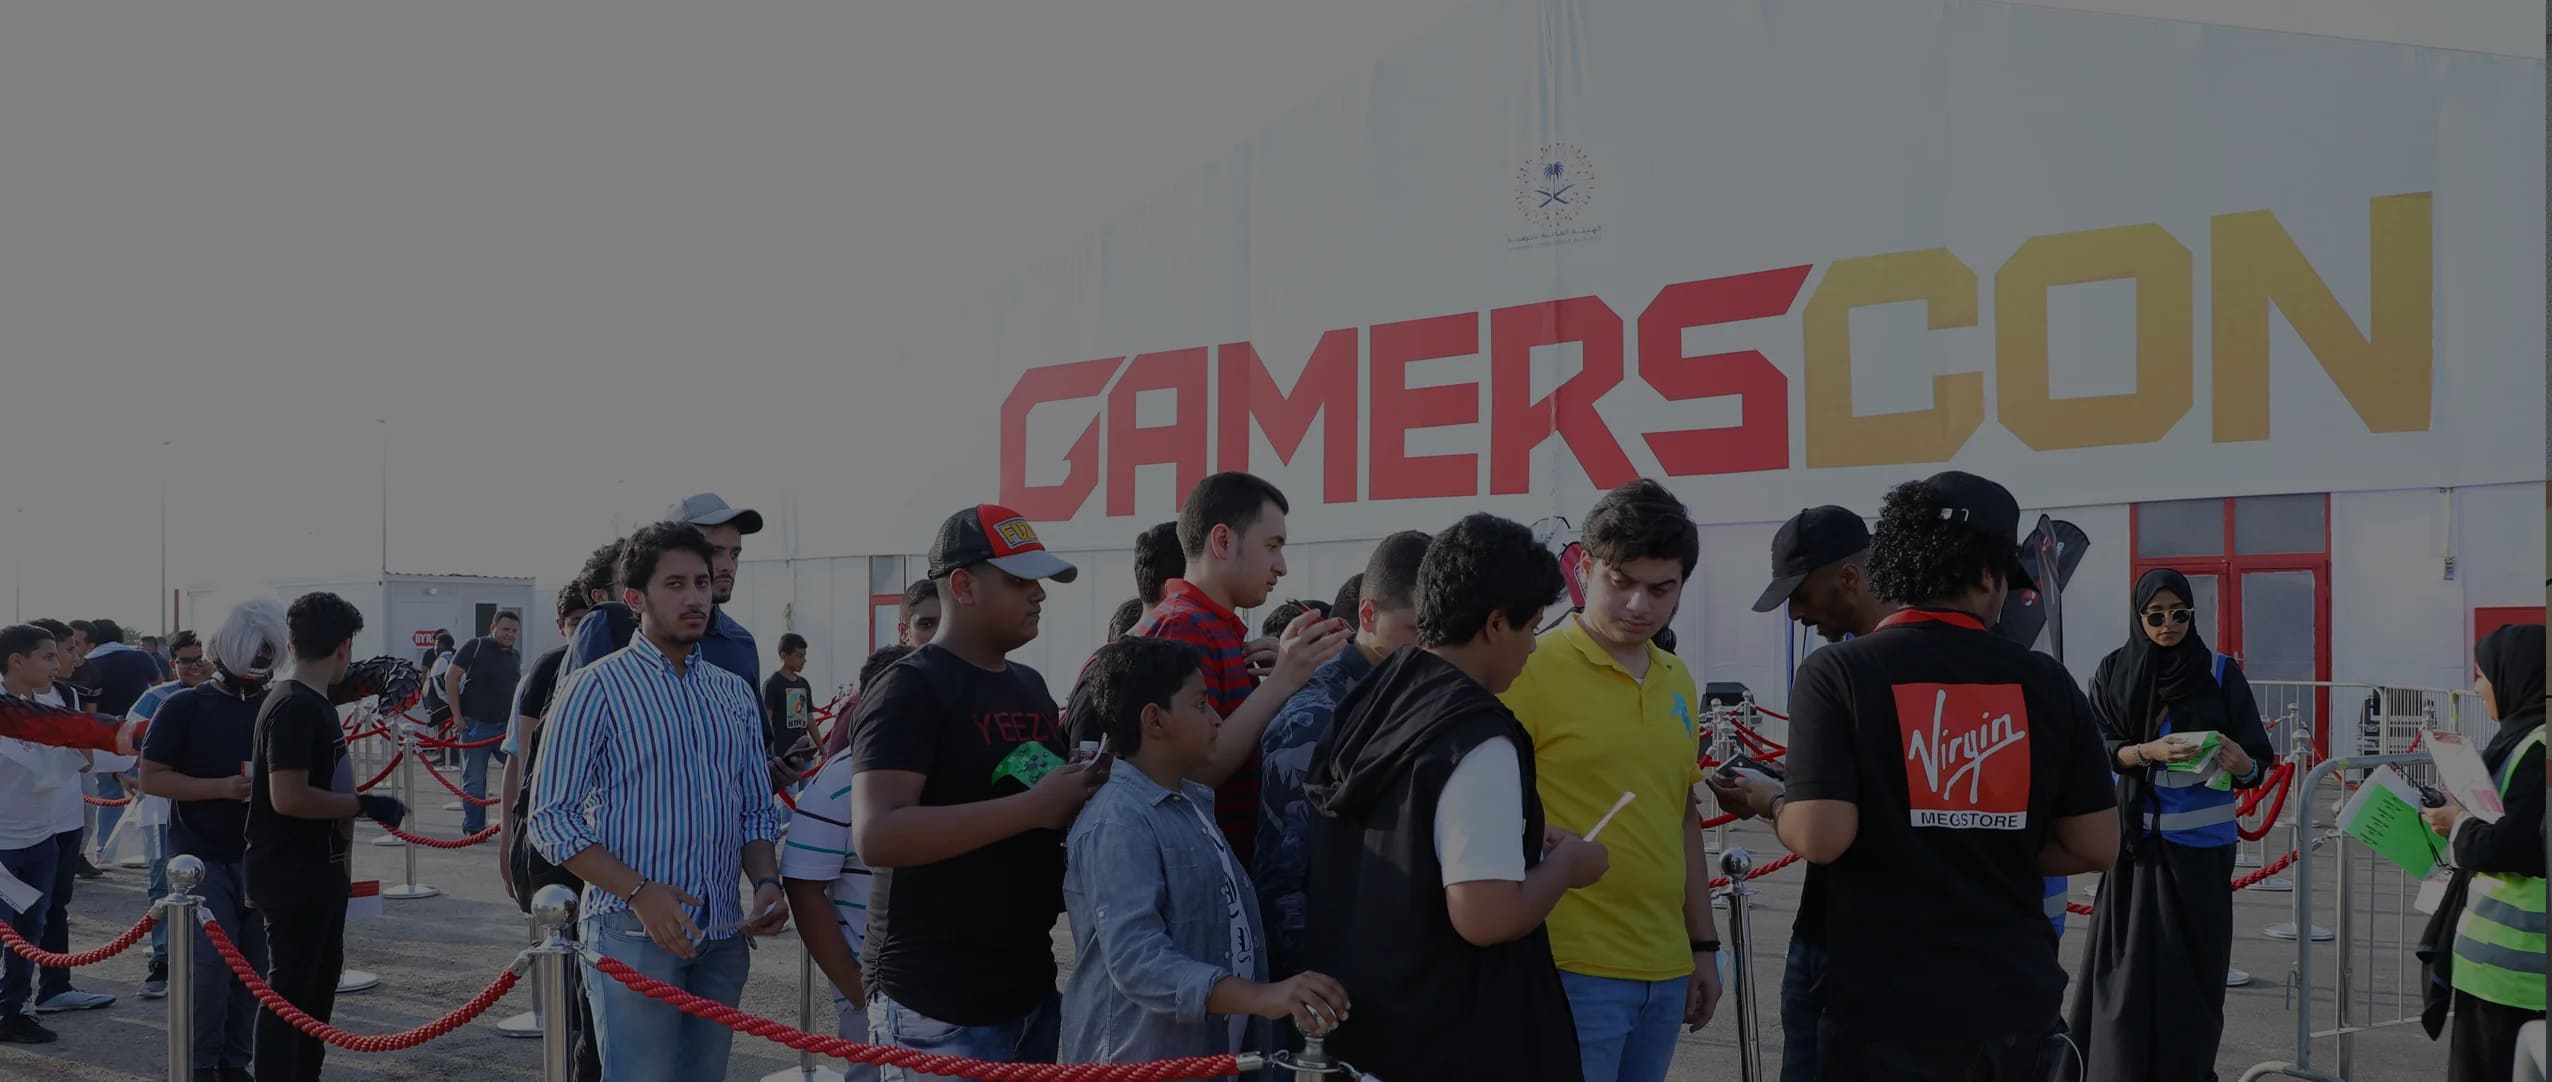 gamerscon jeddah, gaming event